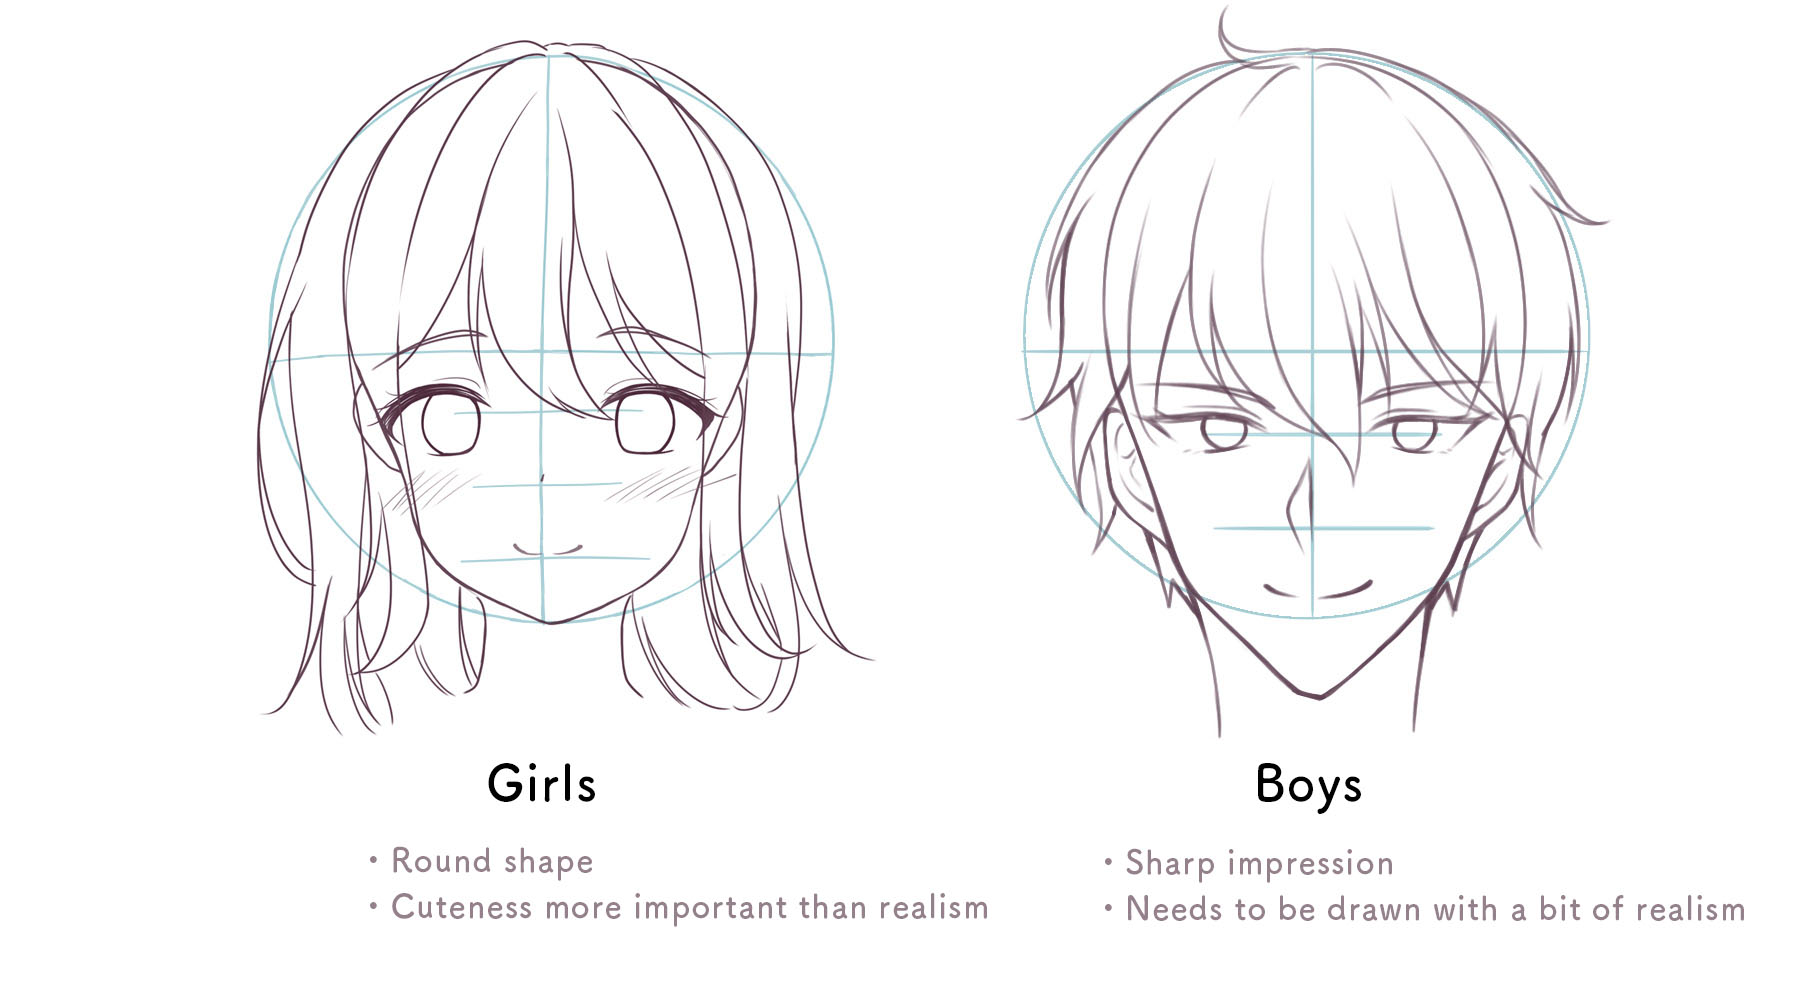 Anime Boy Line Art Illustration Graphic by TamimDesignHub · Creative Fabrica